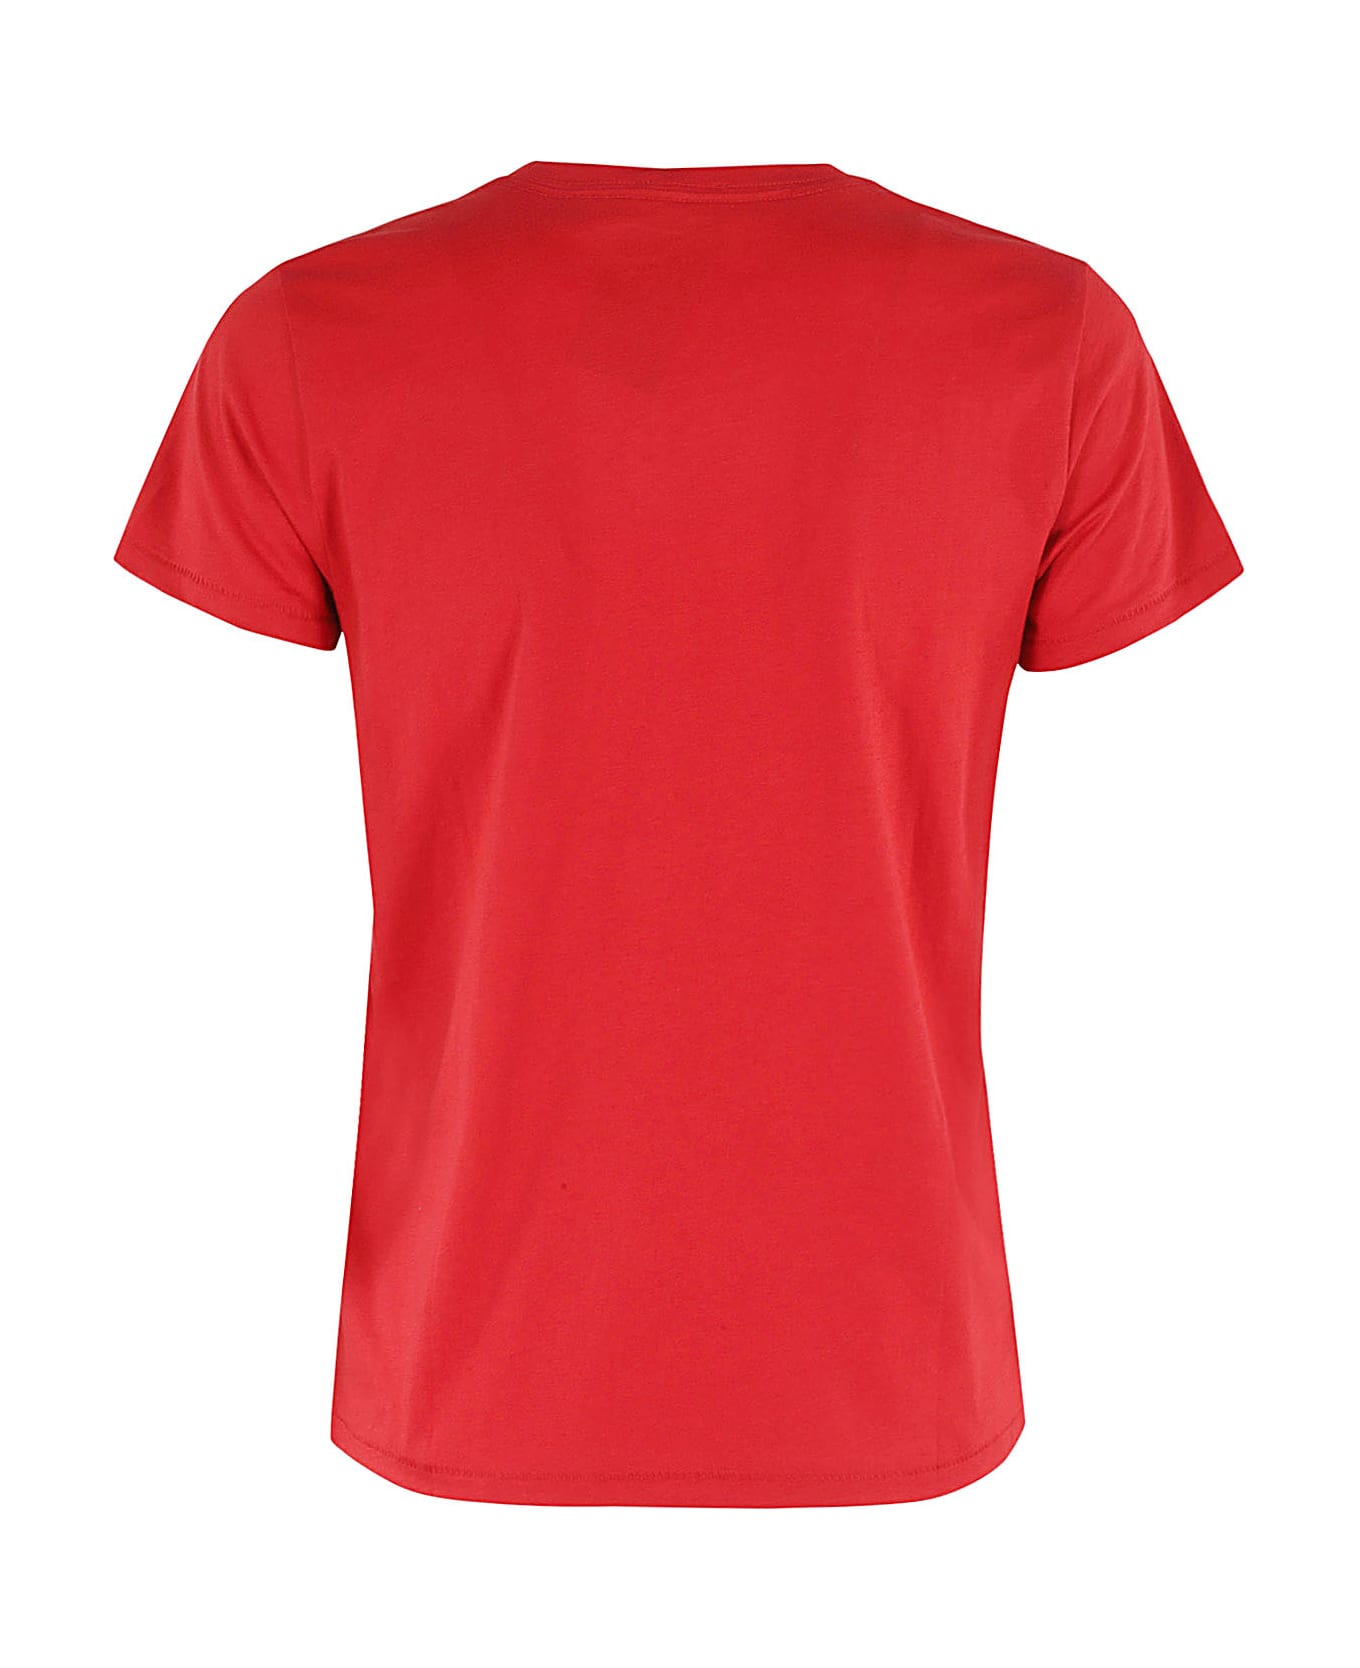 Polo Ralph Lauren Camp Tee - Red Tシャツ